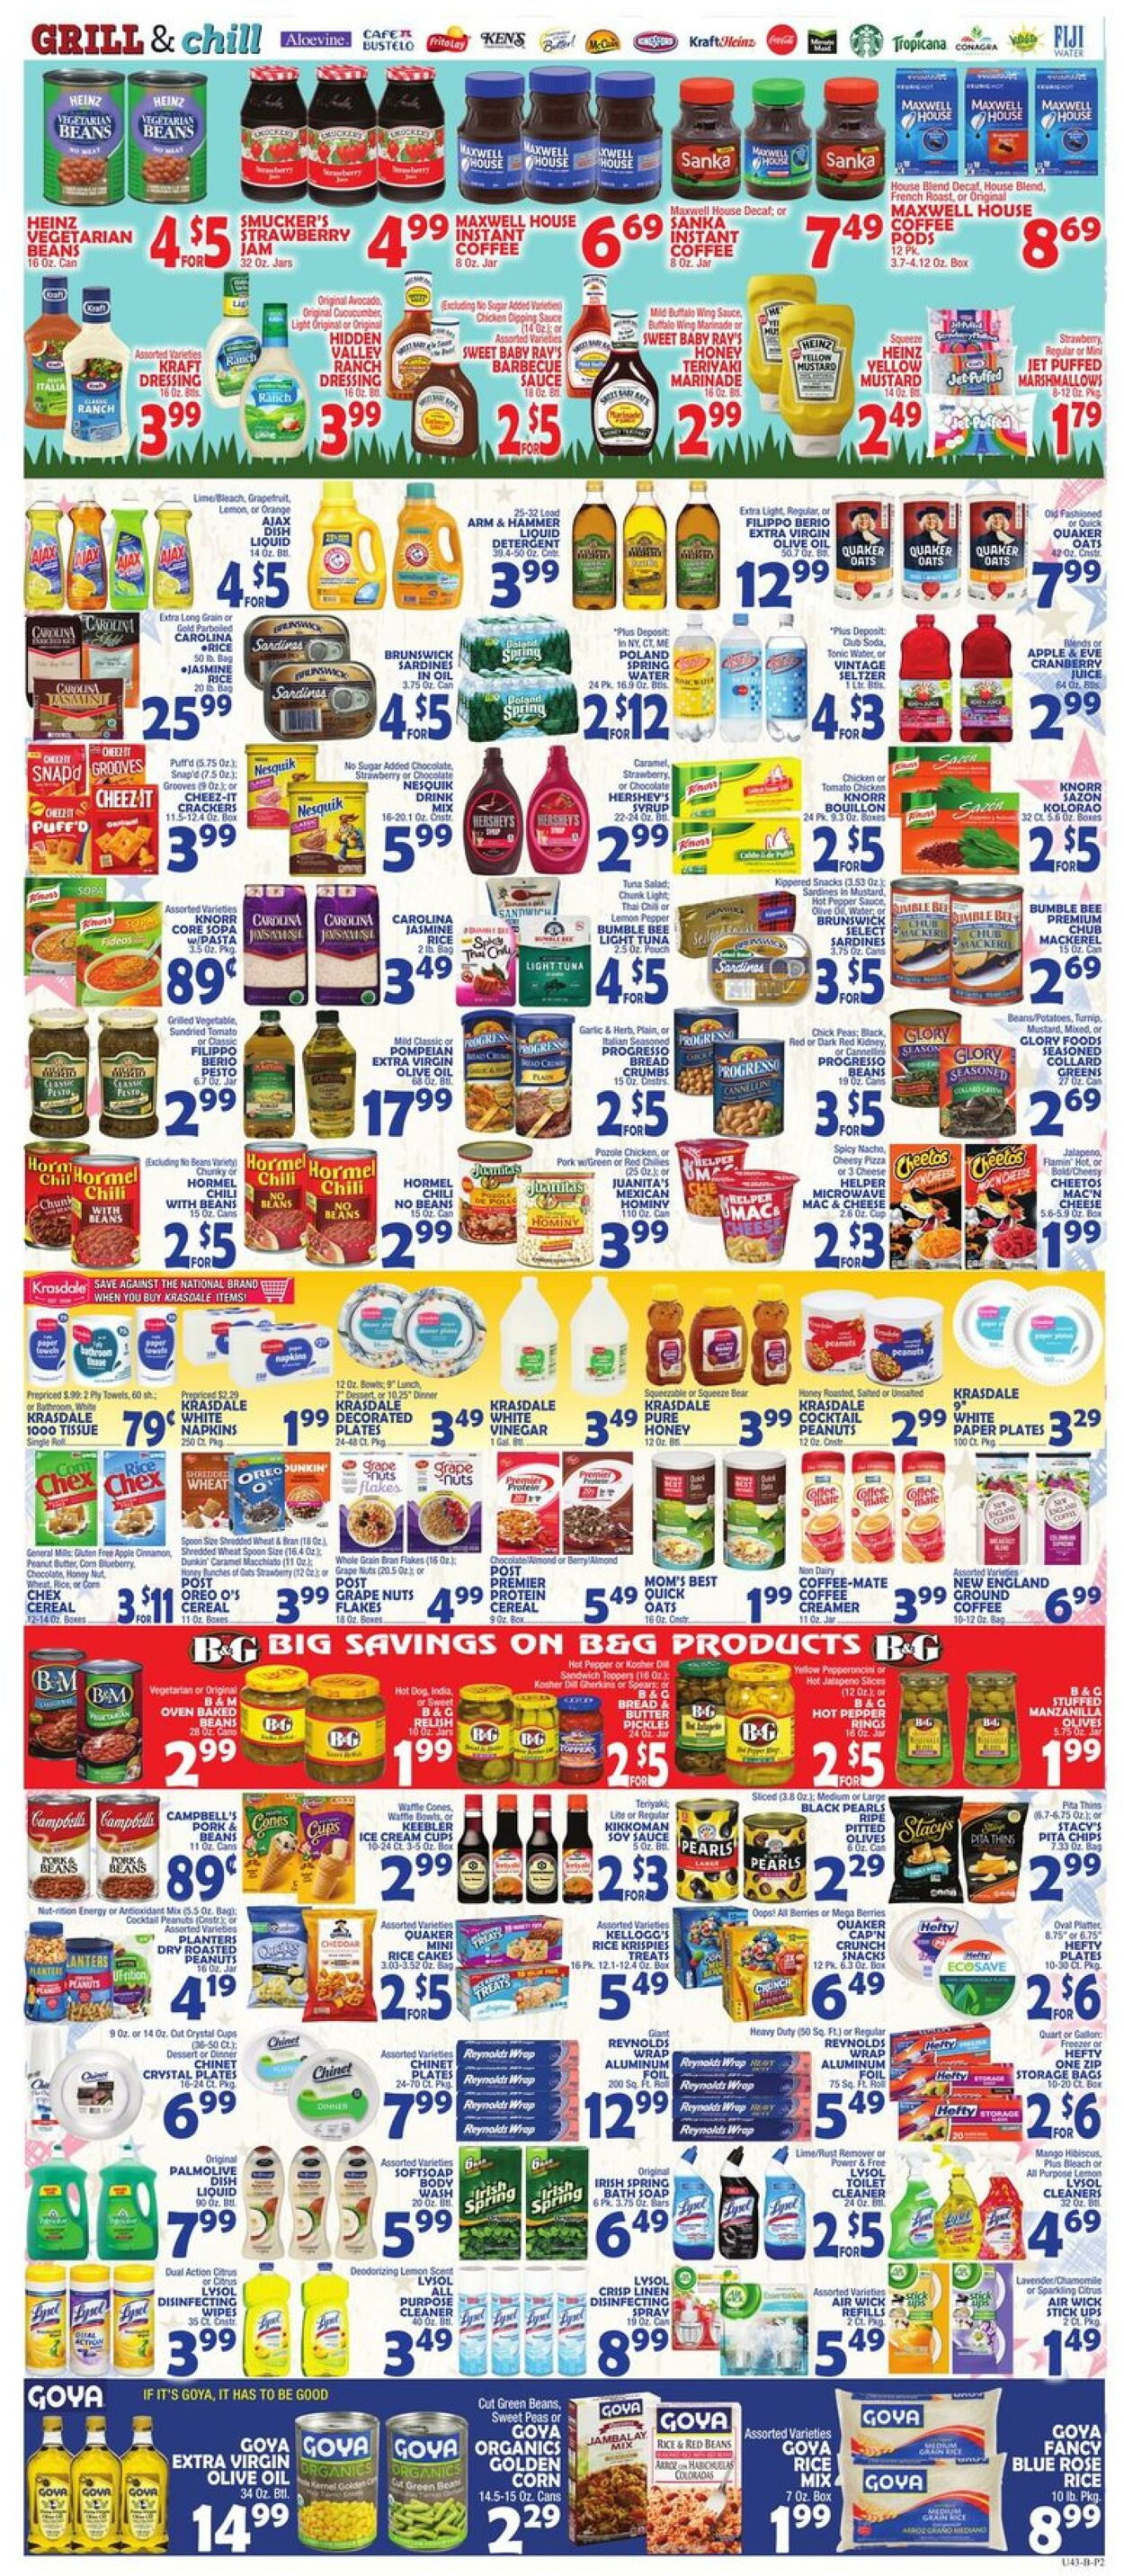 Weekly ad Bravo Supermarkets 07/01/2022 - 07/07/2022